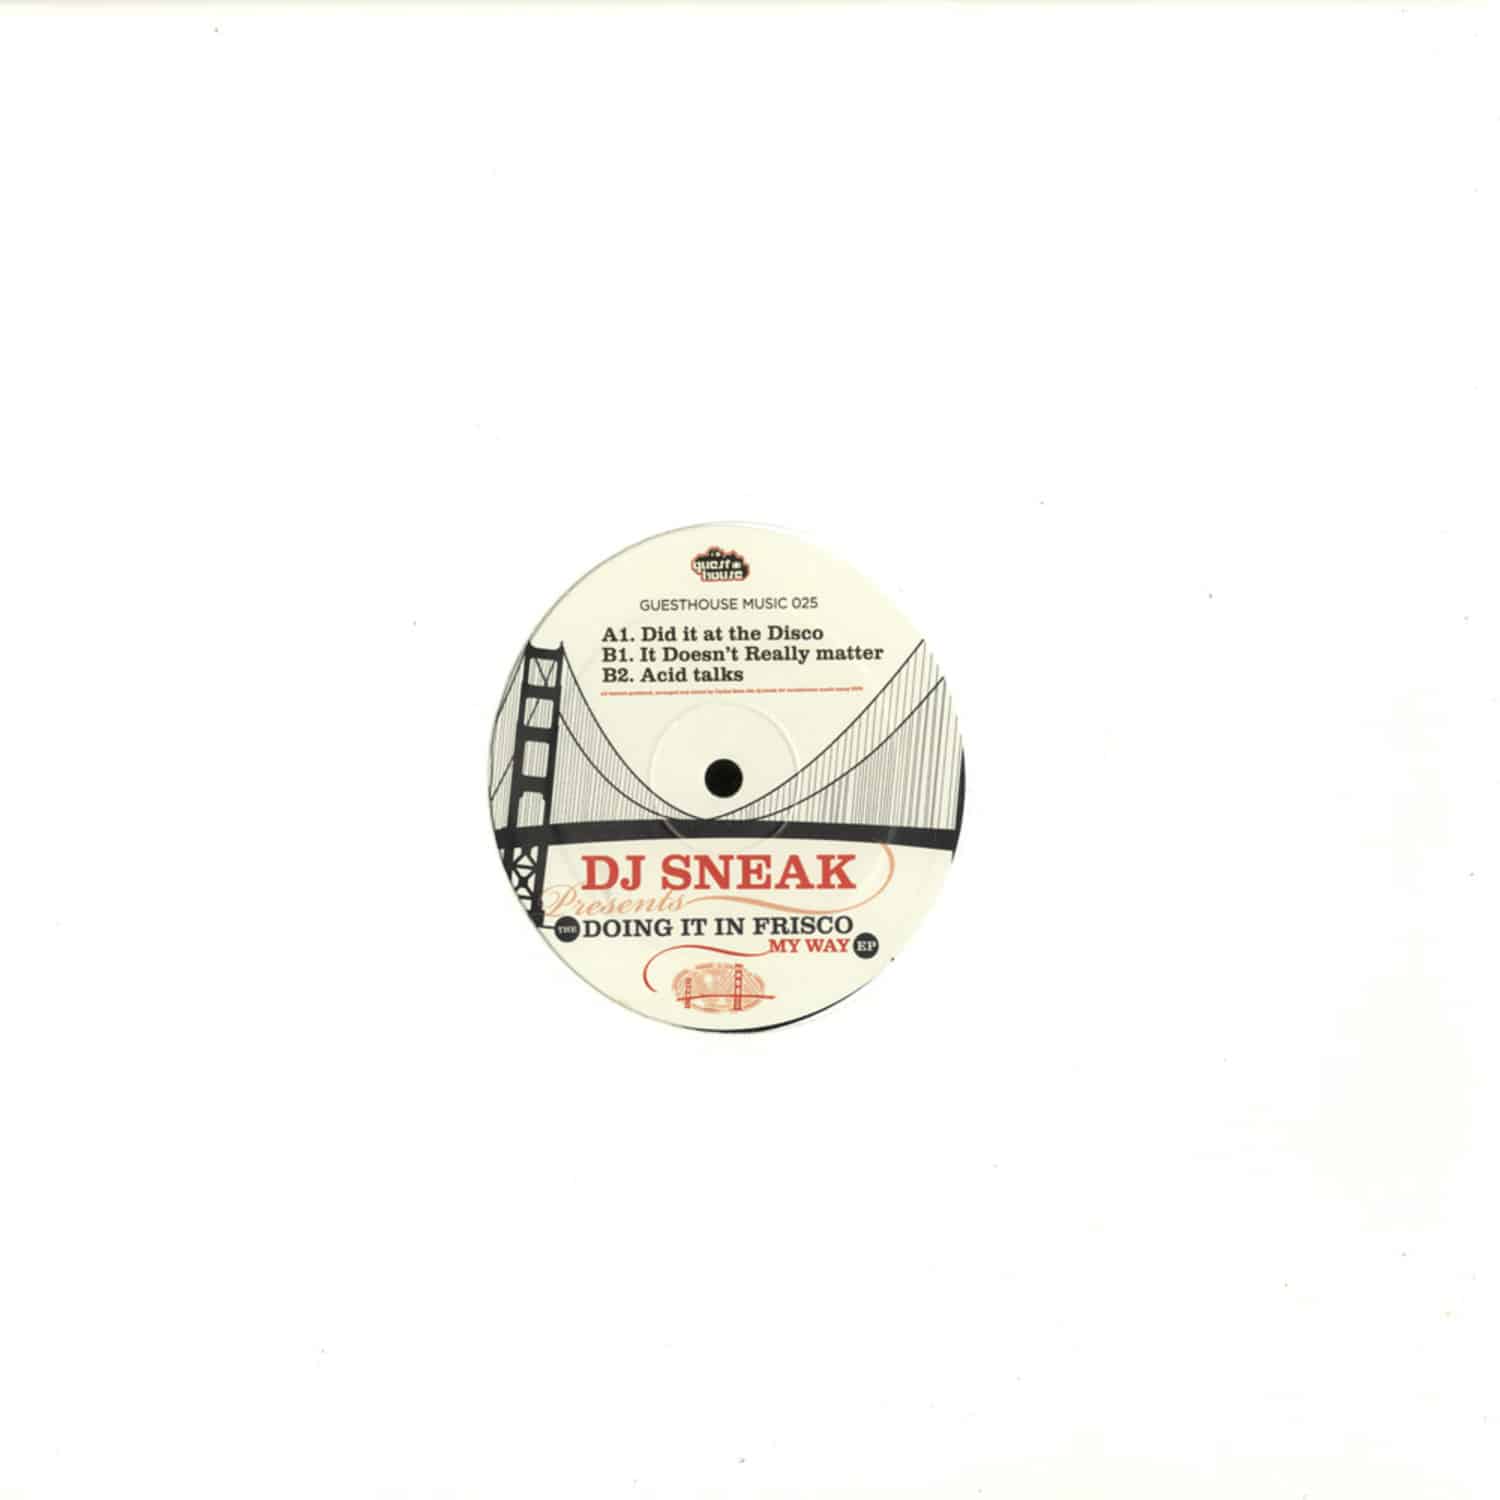 DJ Sneak - THE DOING IT IN FRISCO EP